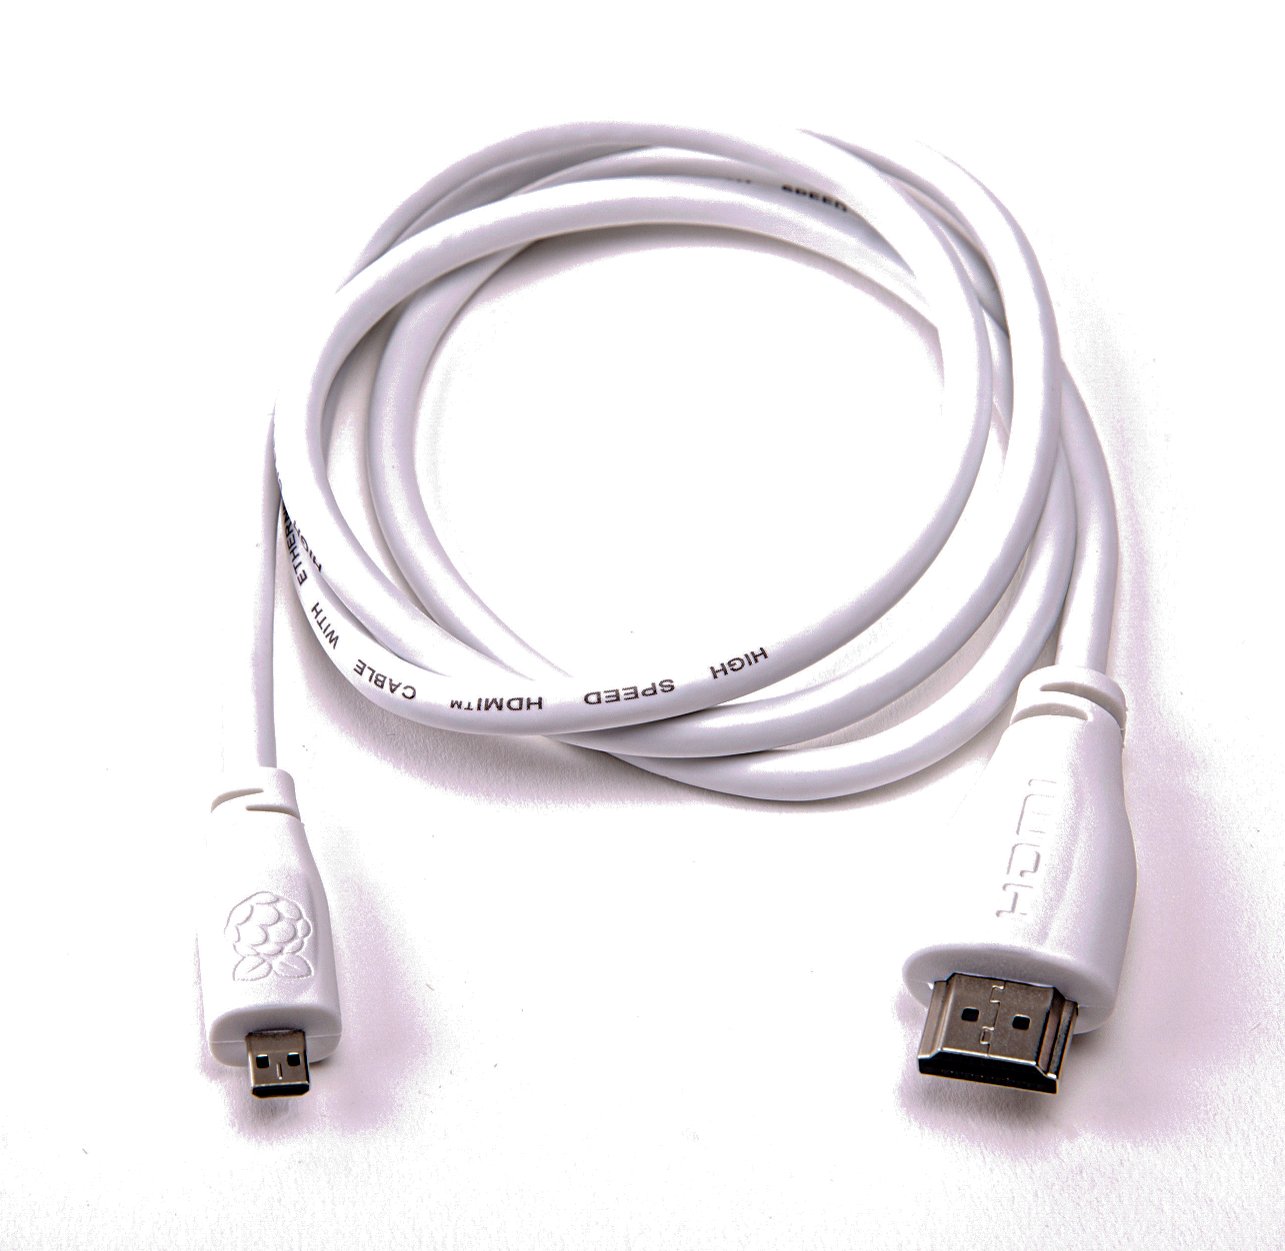 Micro HDMI (Male) to Standard HDMI (Male) Cable for Raspberry Pi 4